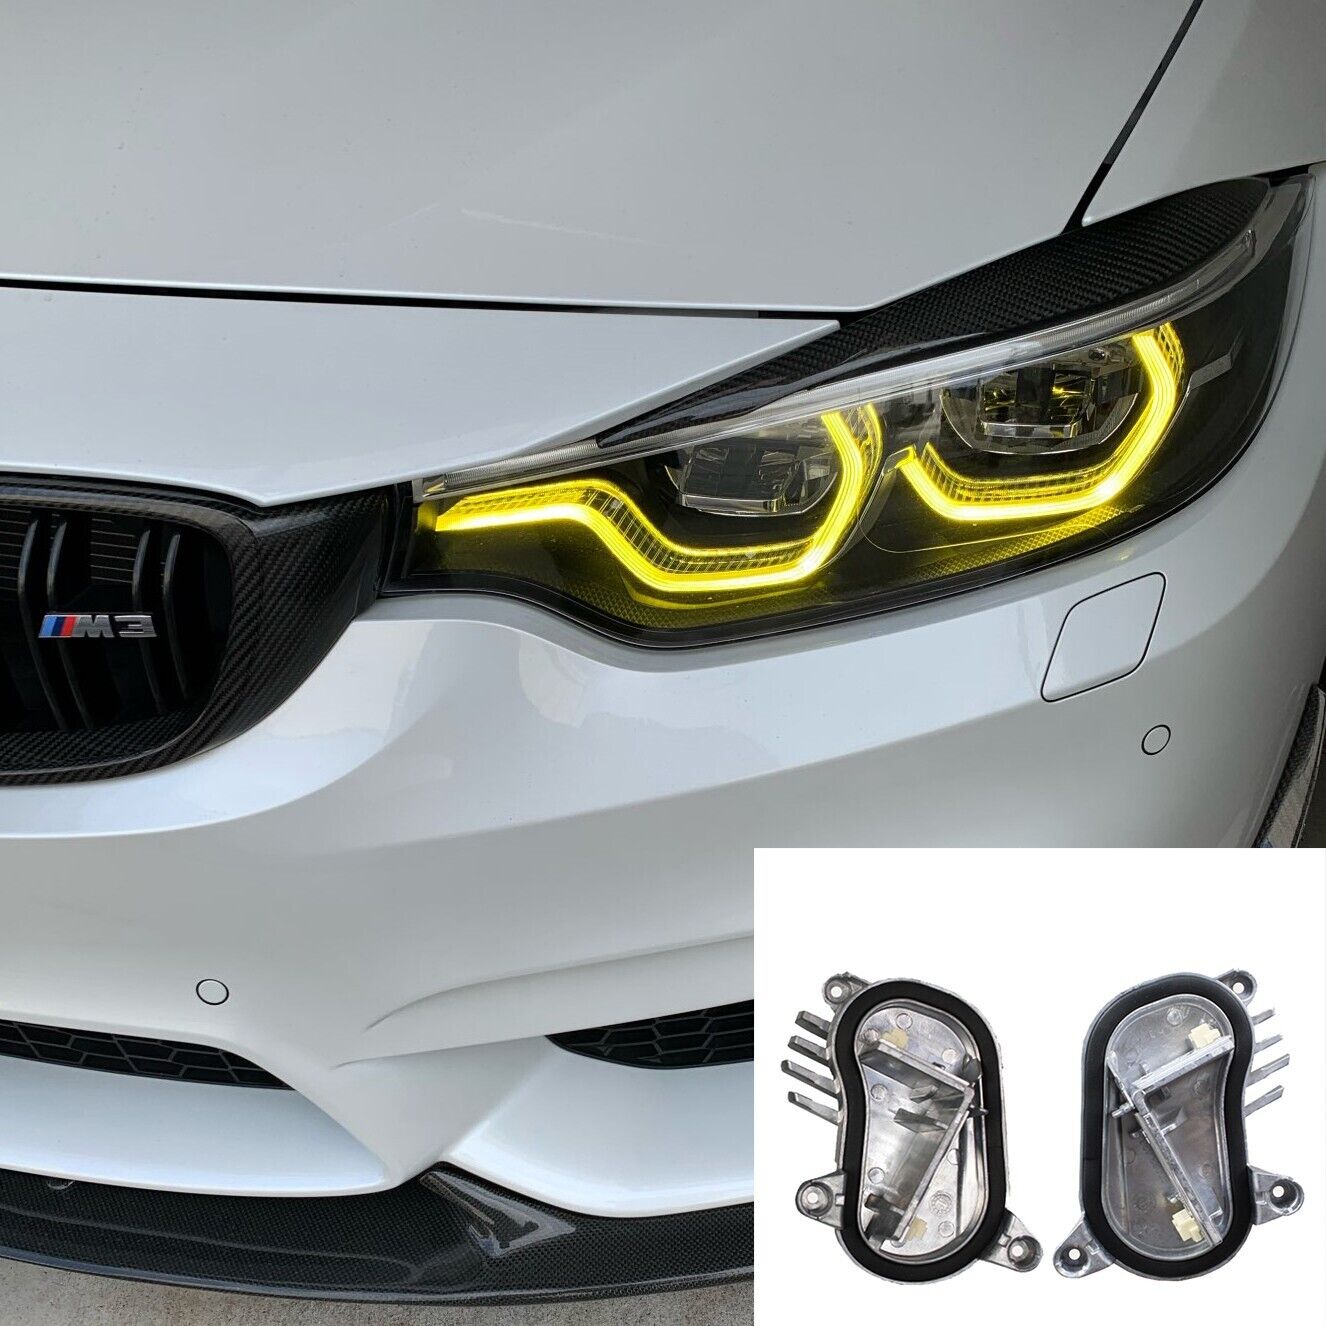 BMW M4 PRE LCI / LCI RGBW DRL LED Kit / Single Color / SHOW EDITION Kits available